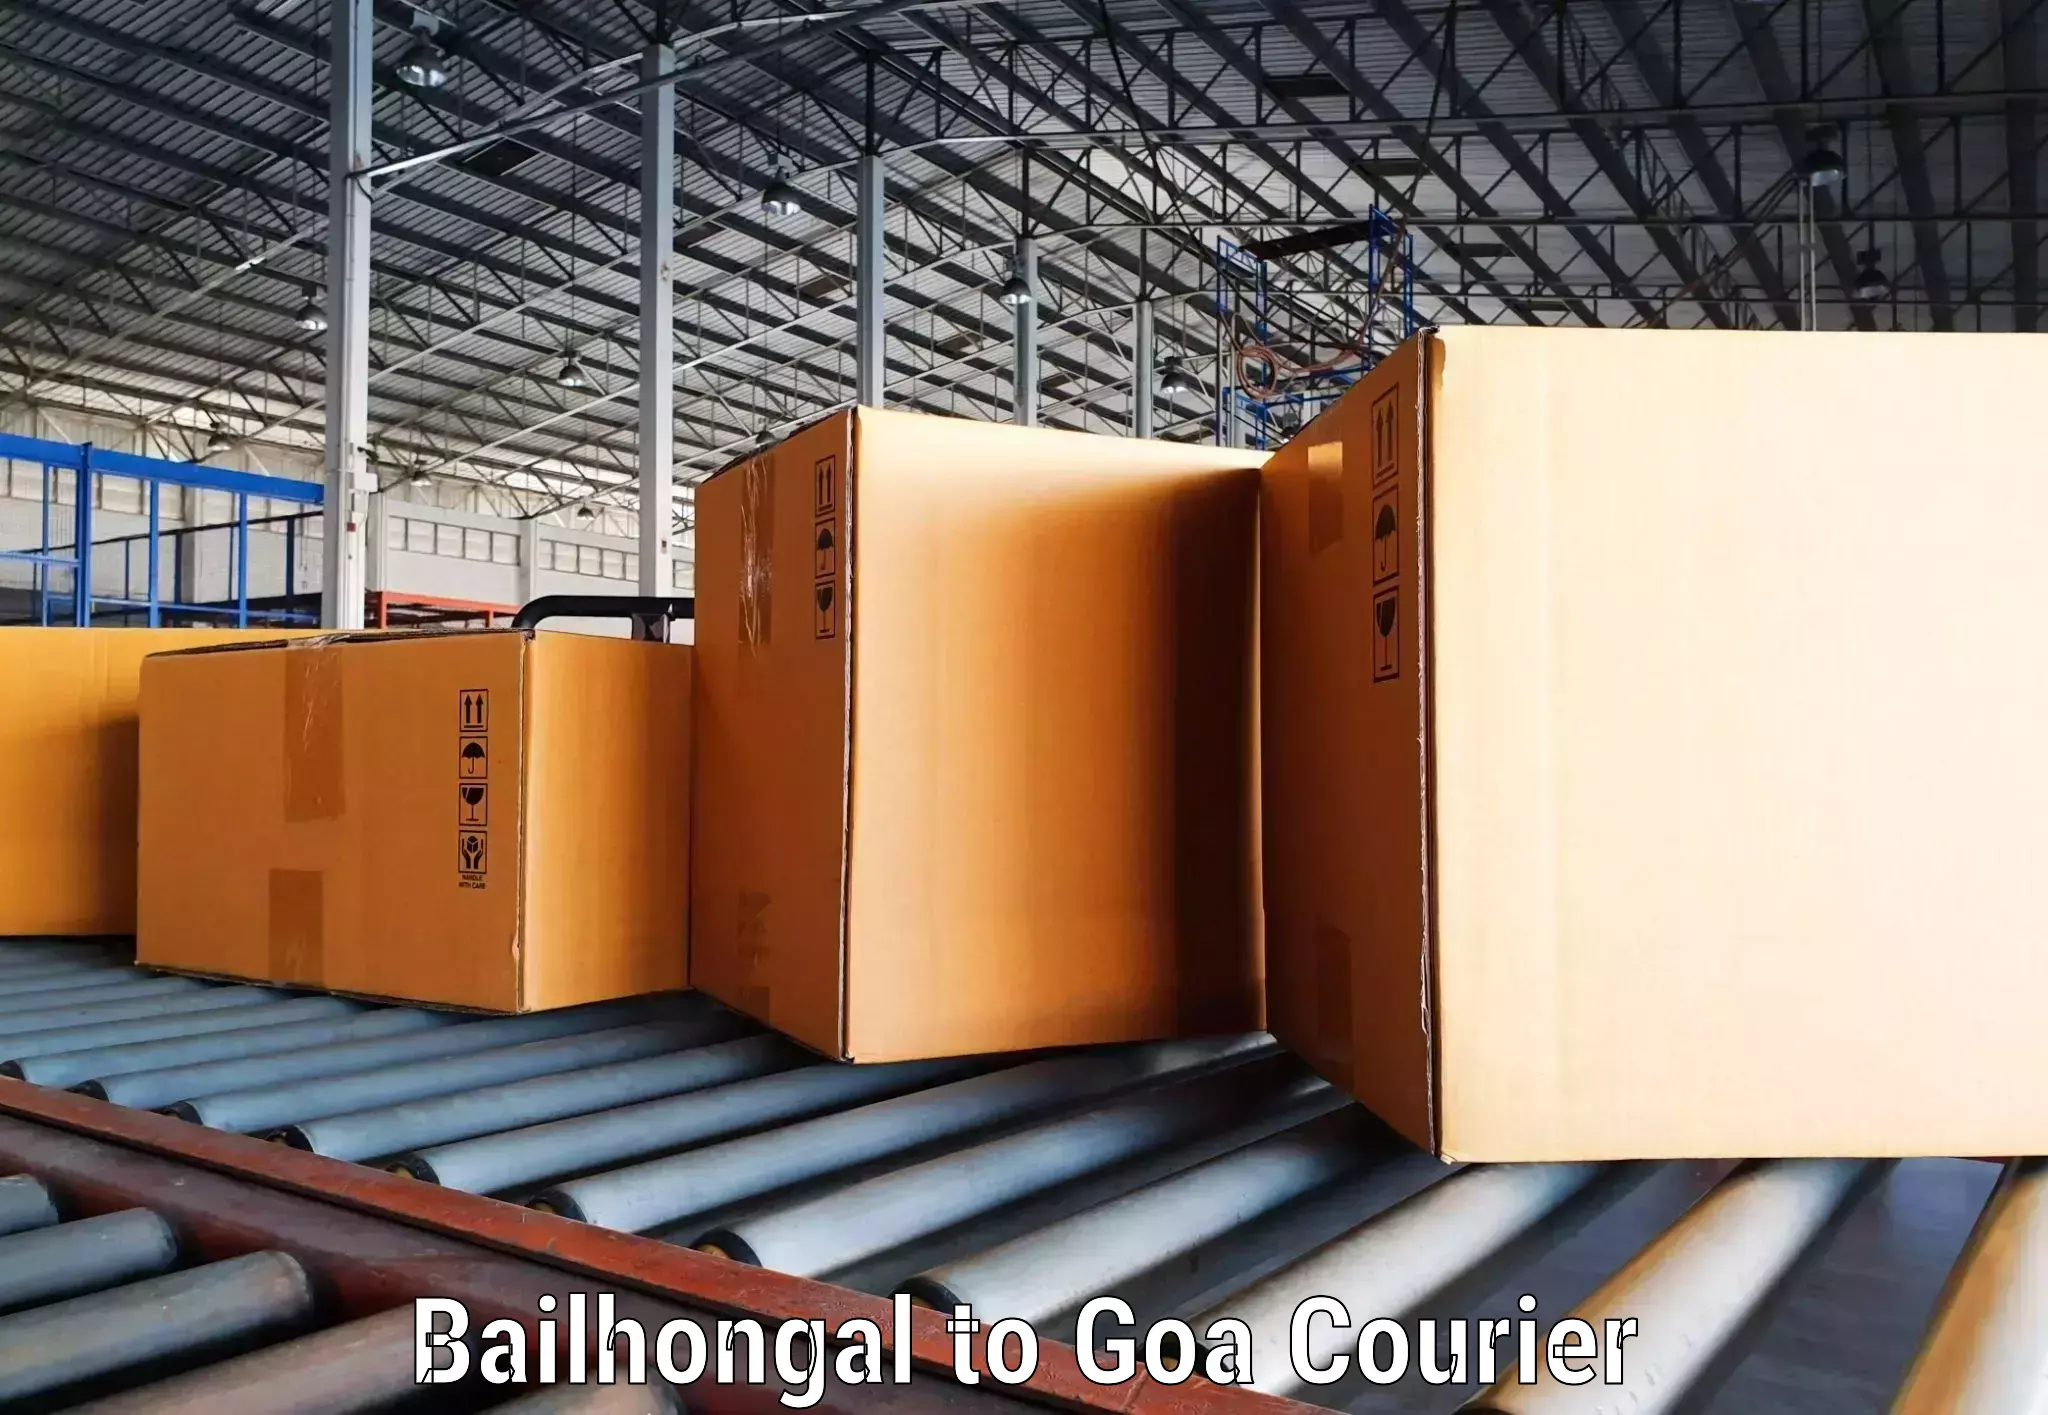 Courier service comparison Bailhongal to Panaji